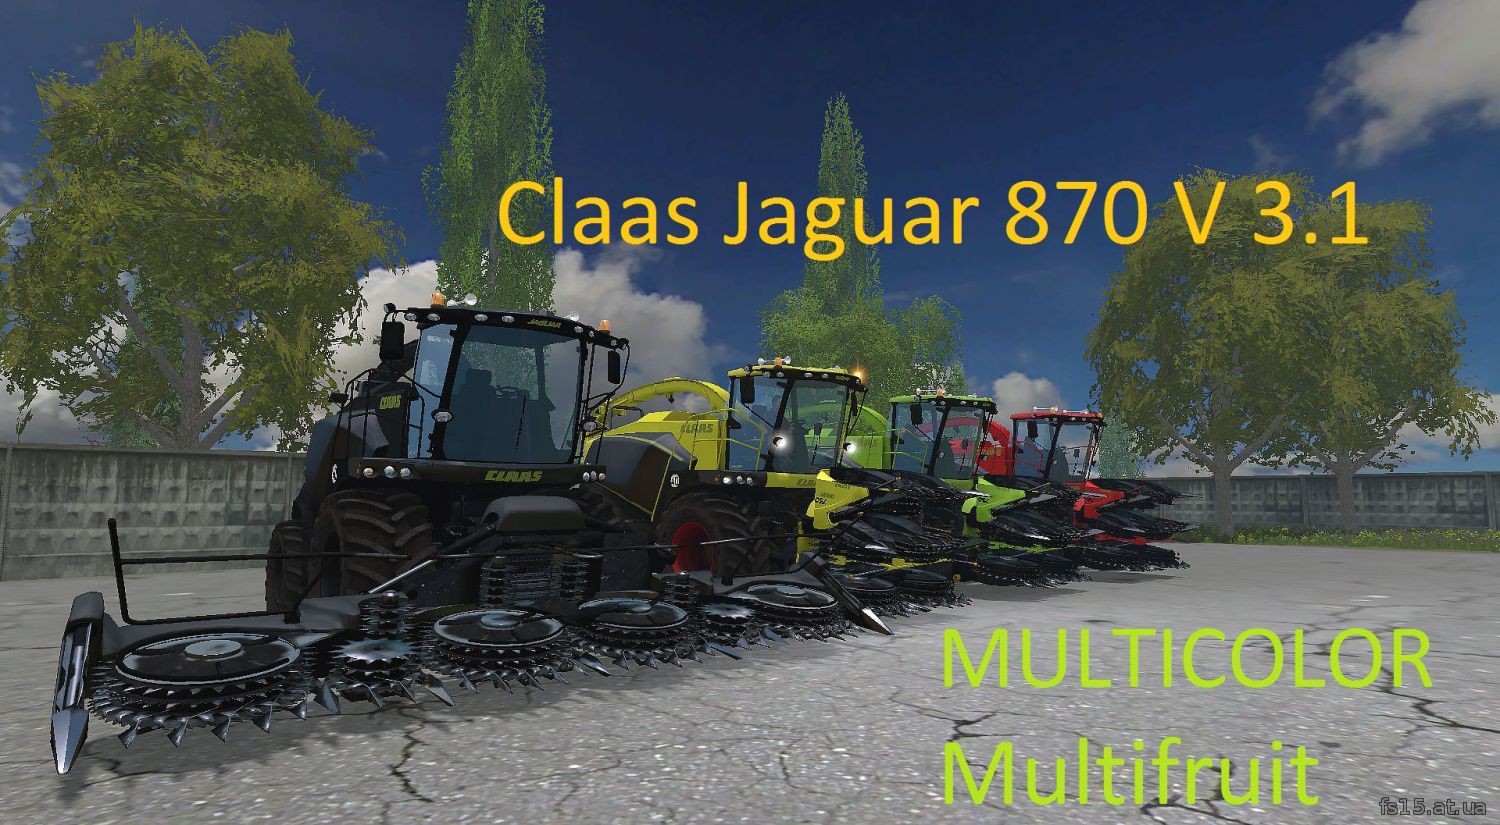 Claas Jaguar 870 MULTICOLOR V 3.1 Multifruit скачать